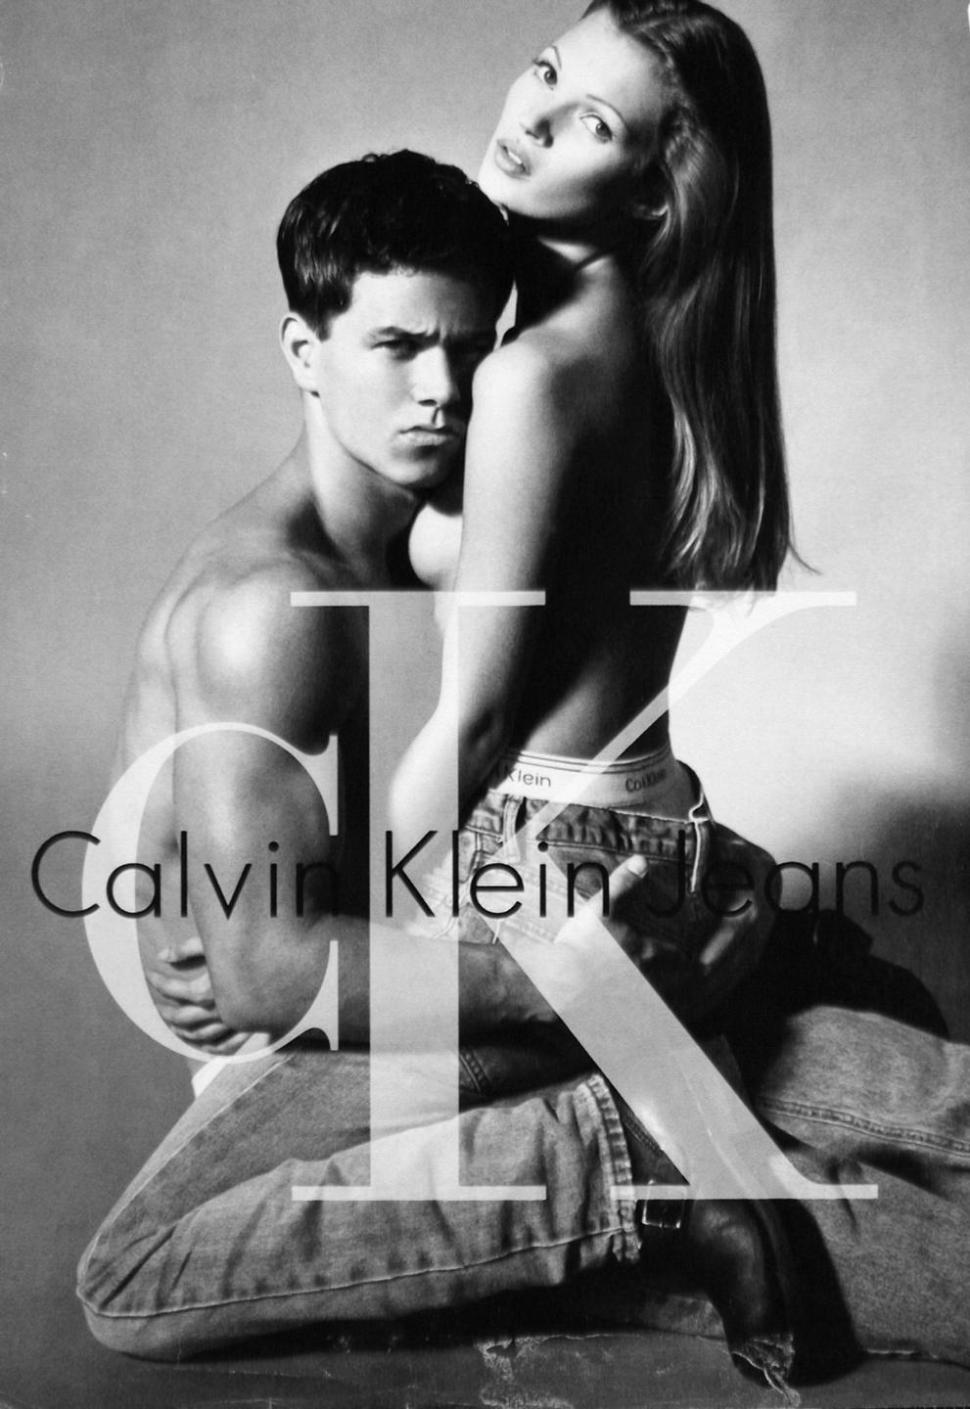 Mark Wahlberg in his original 1992 Calvin Klein ad